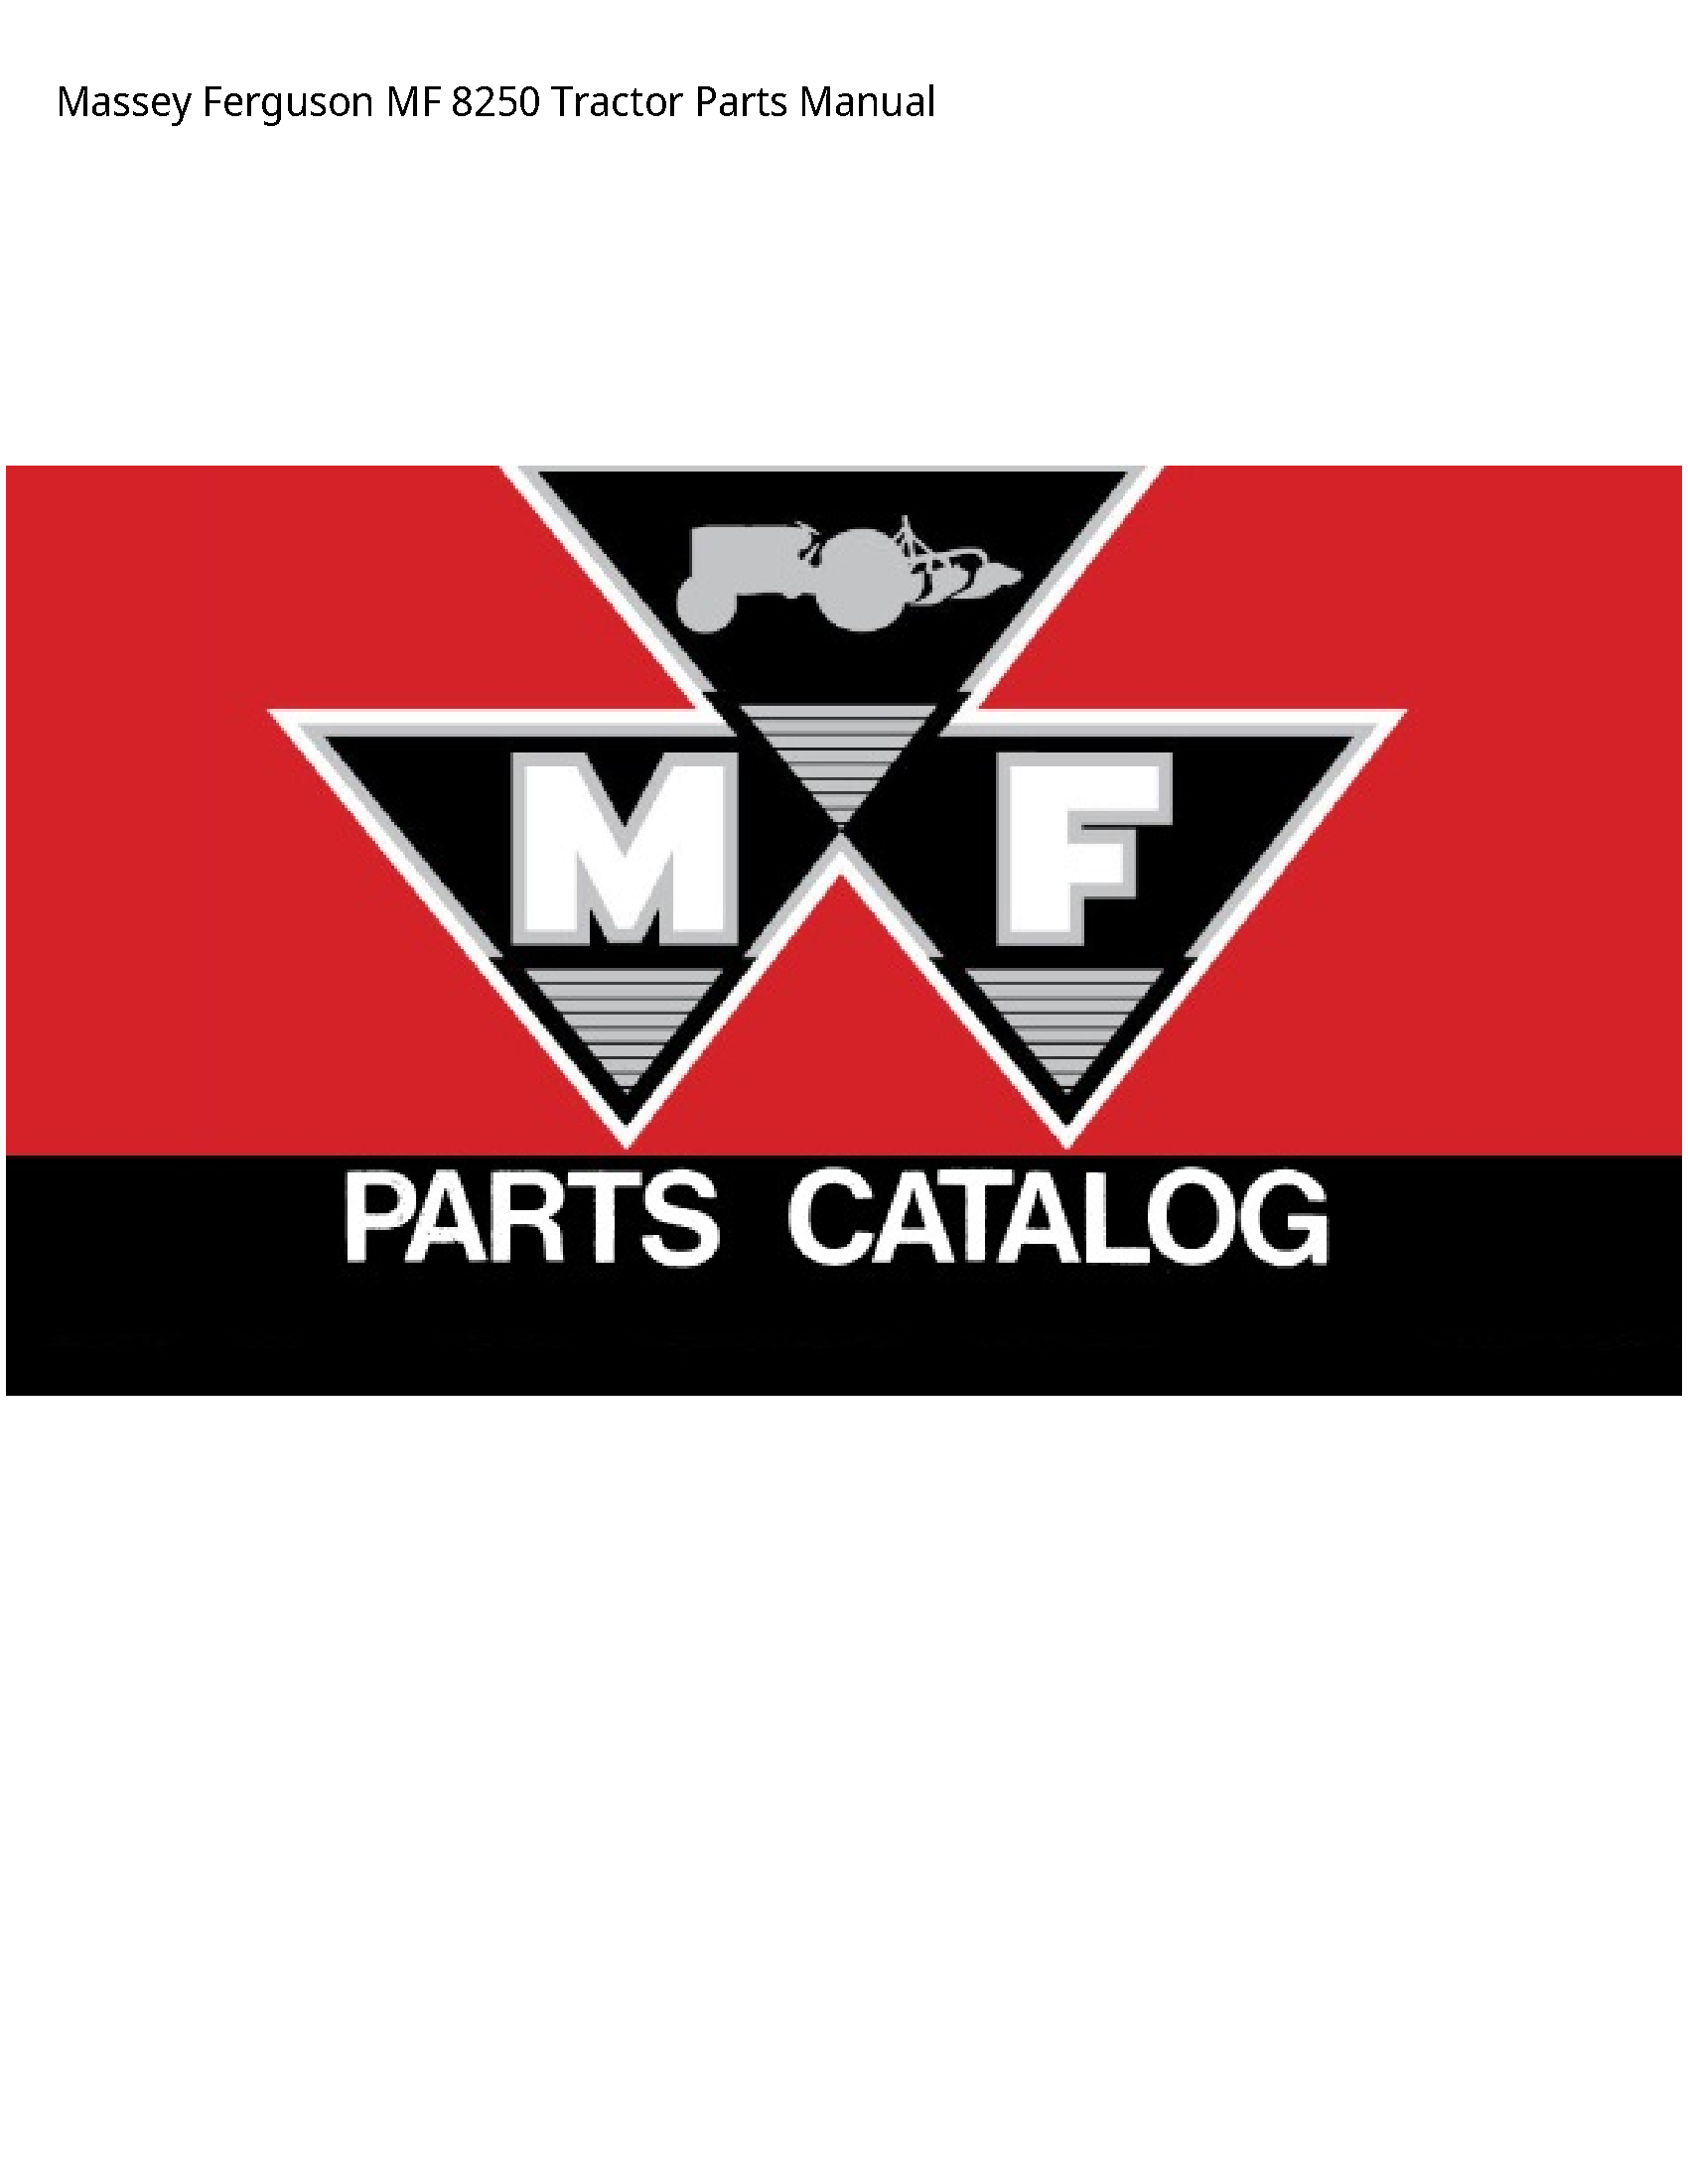 Massey Ferguson 8250 MF Tractor Parts manual